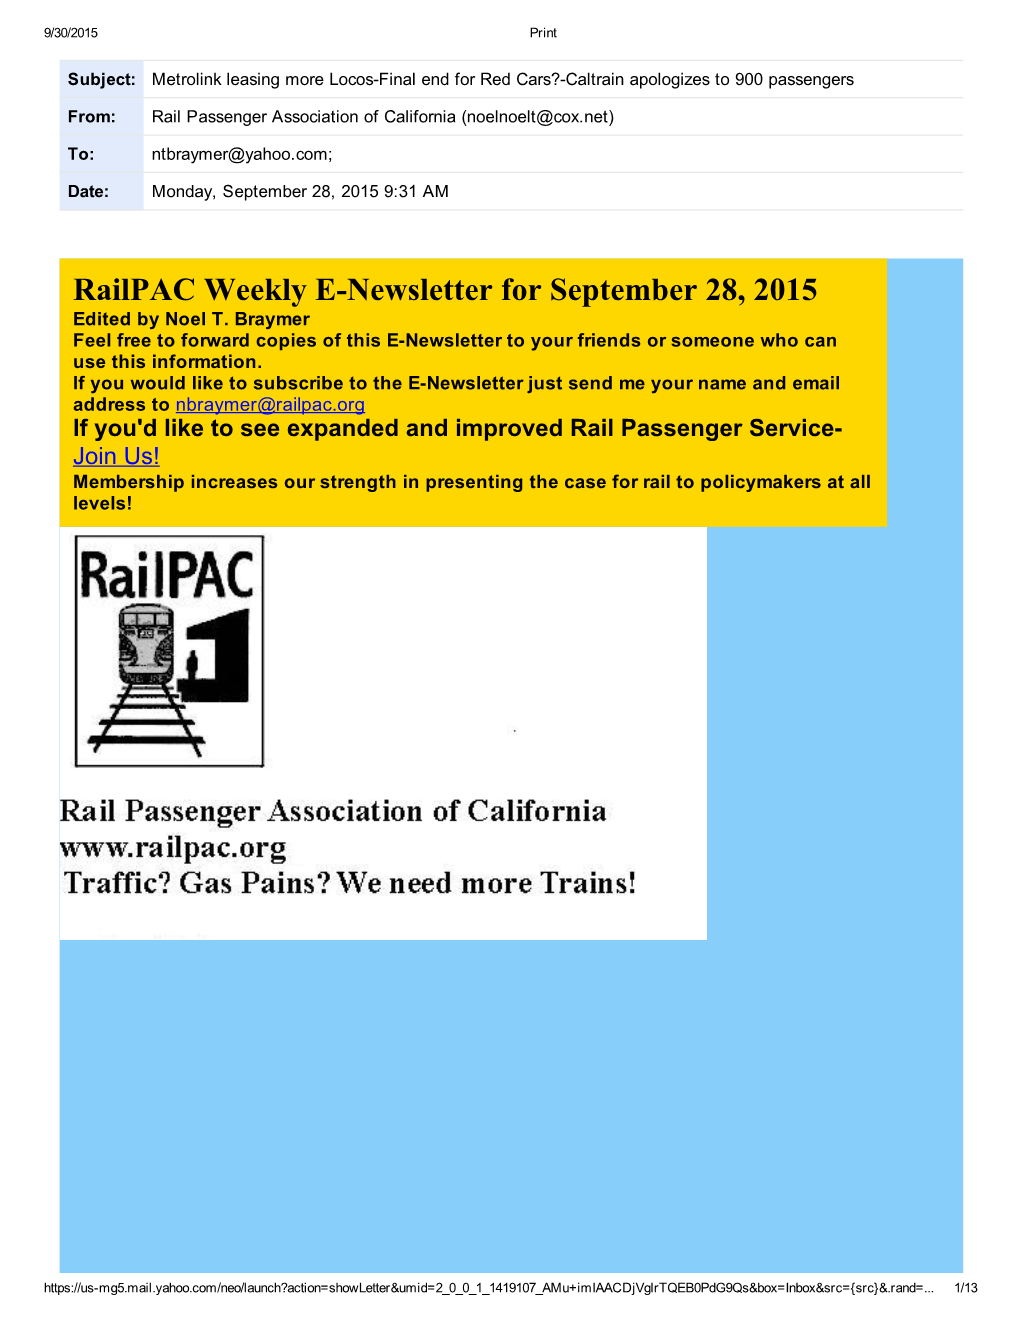 Railpac Weekly Enewsletter for September 28, 2015